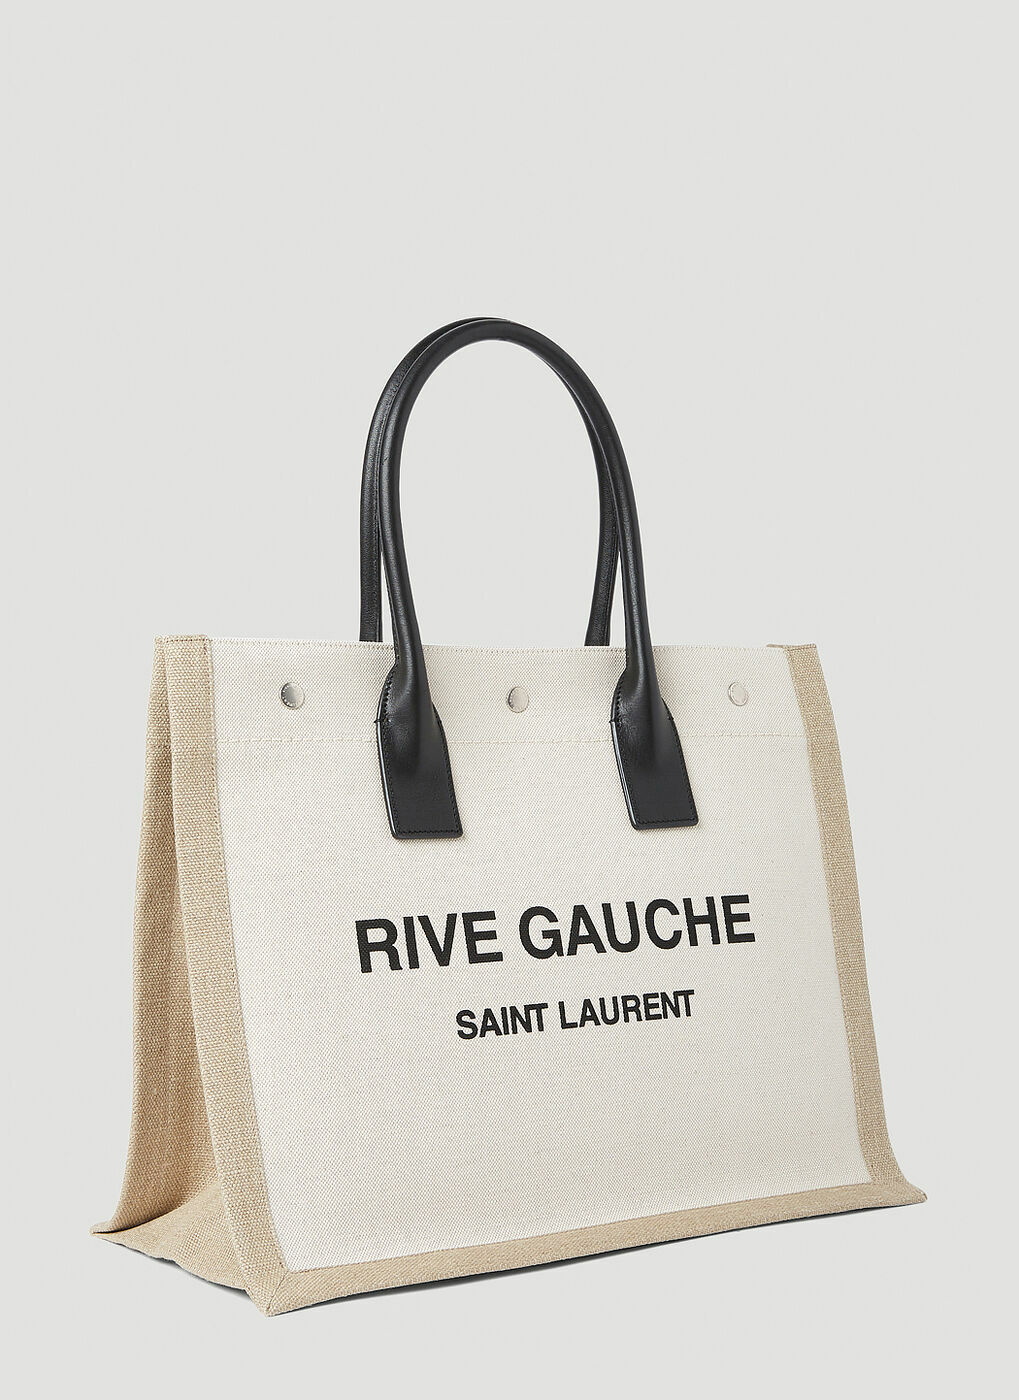 Rive Gauche Tote Bag in Cream Saint Laurent